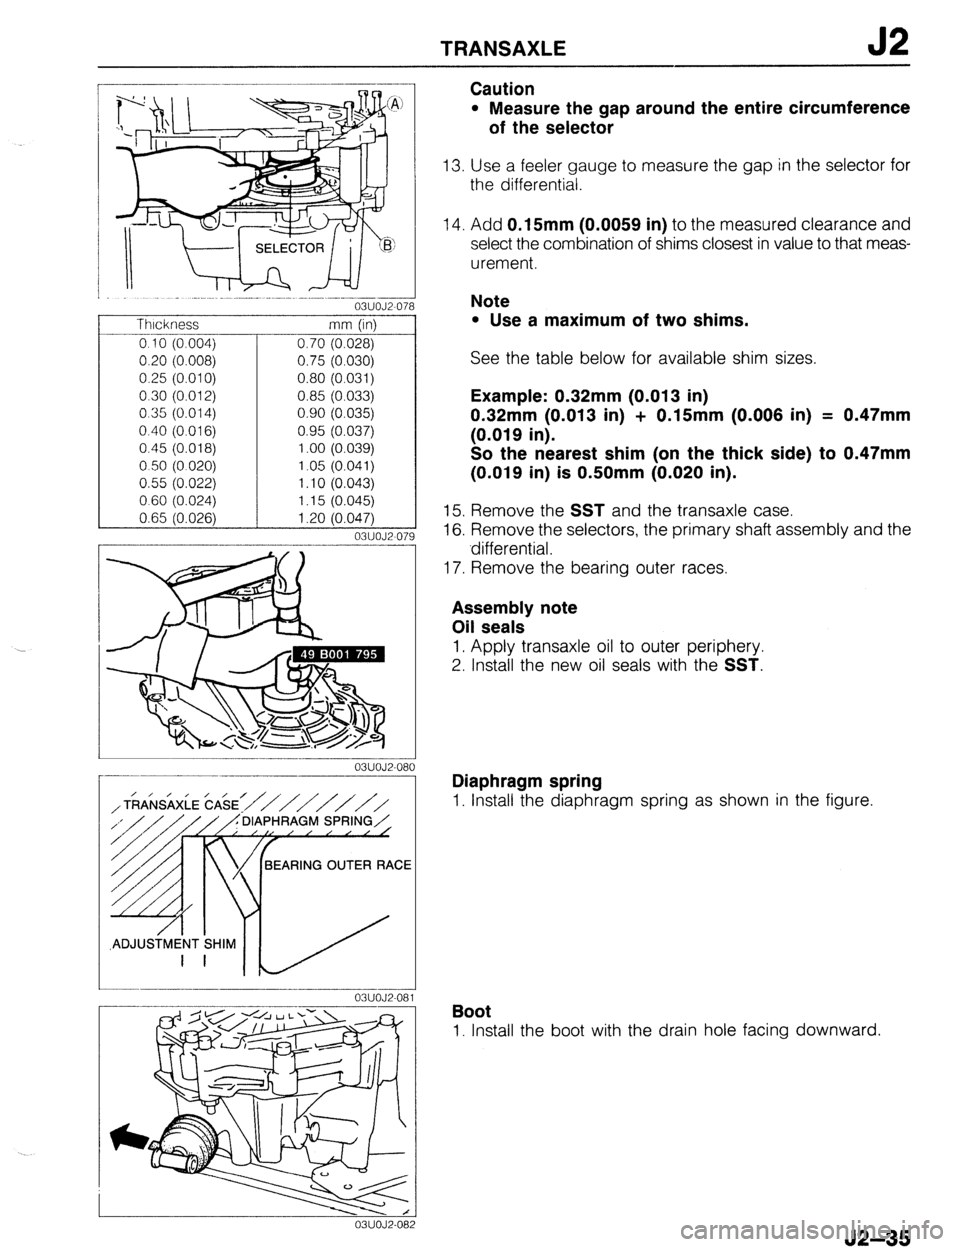 MAZDA PROTEGE 1992  Workshop Manual TRANSAXLE 
i 
03UOJ2-078 
- 
Thickness 
0.10 (0.004) 
0.20 (0.008) 
0.25 (0.010) 
0.30 (0.012) 
0.35 (0.014) 
0.40 (0.016) 
0.45 (0.018) 
050 (0020) 
0.55 (0.022) 
0 60 (0.024) 
0.65 (0.026) 
03UOJZO7